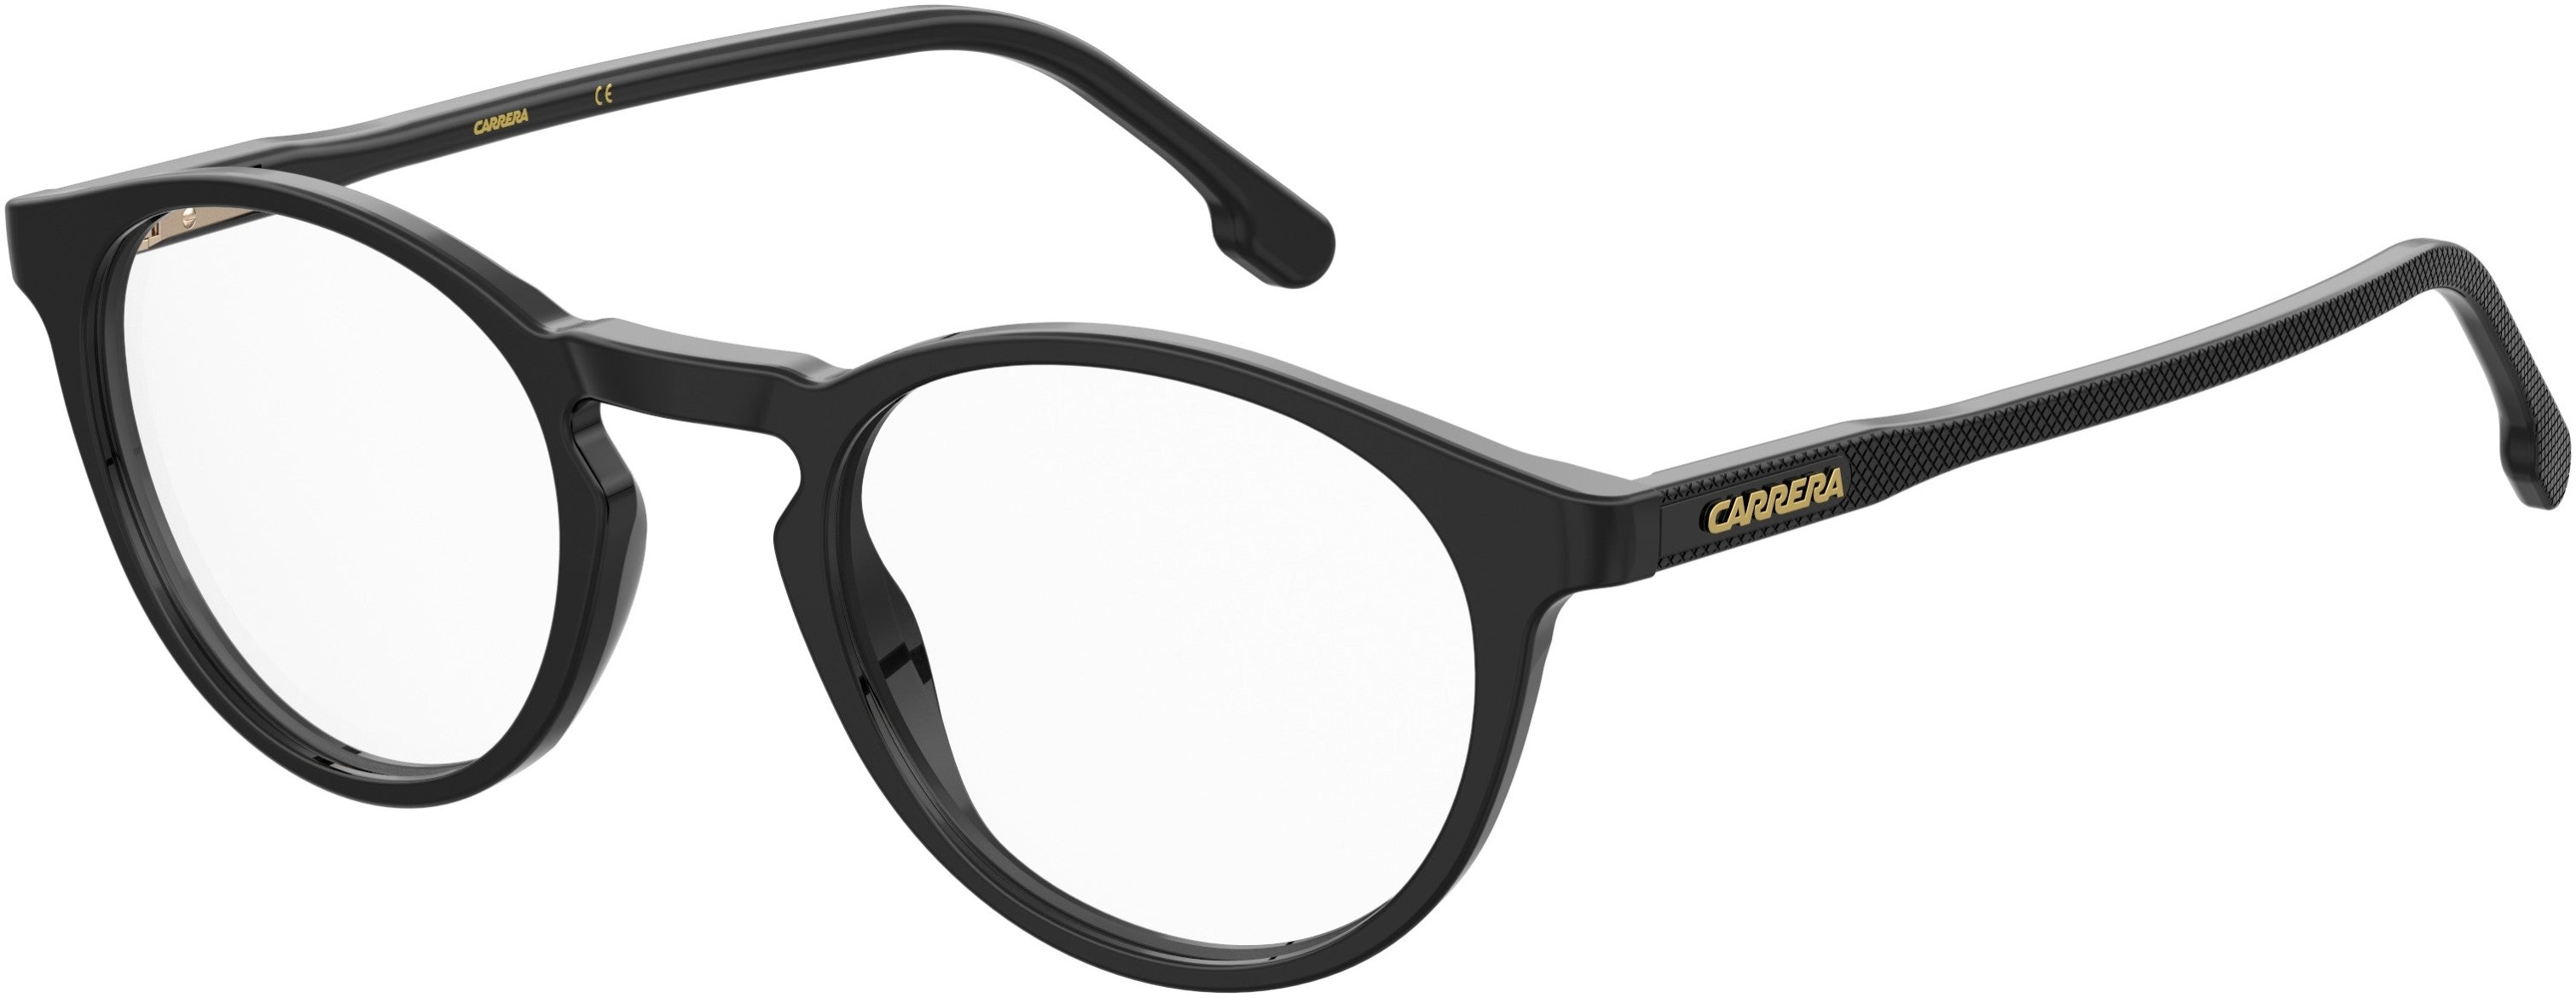  Carrera 255 Tea Cup Eyeglasses 0807-0807  Black (00 Demo Lens)